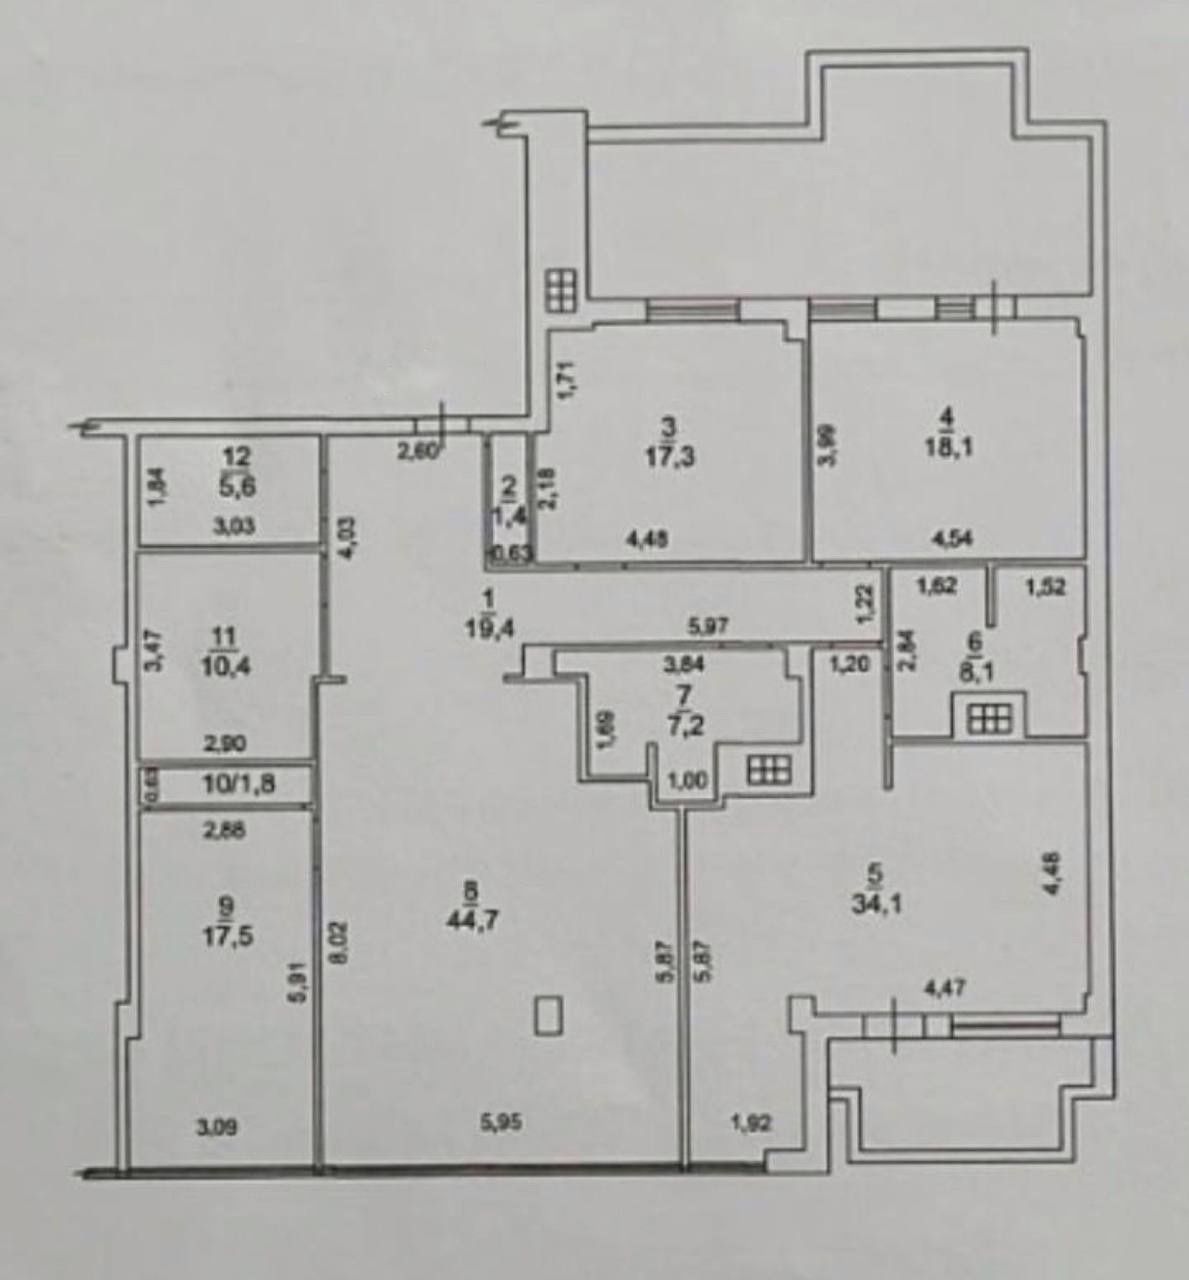 Квартира 200 кв.м. в ЖК Ясная Поляна-2. Плюс 2 паркоместа в стоимости ID 47837 (Фото 7)